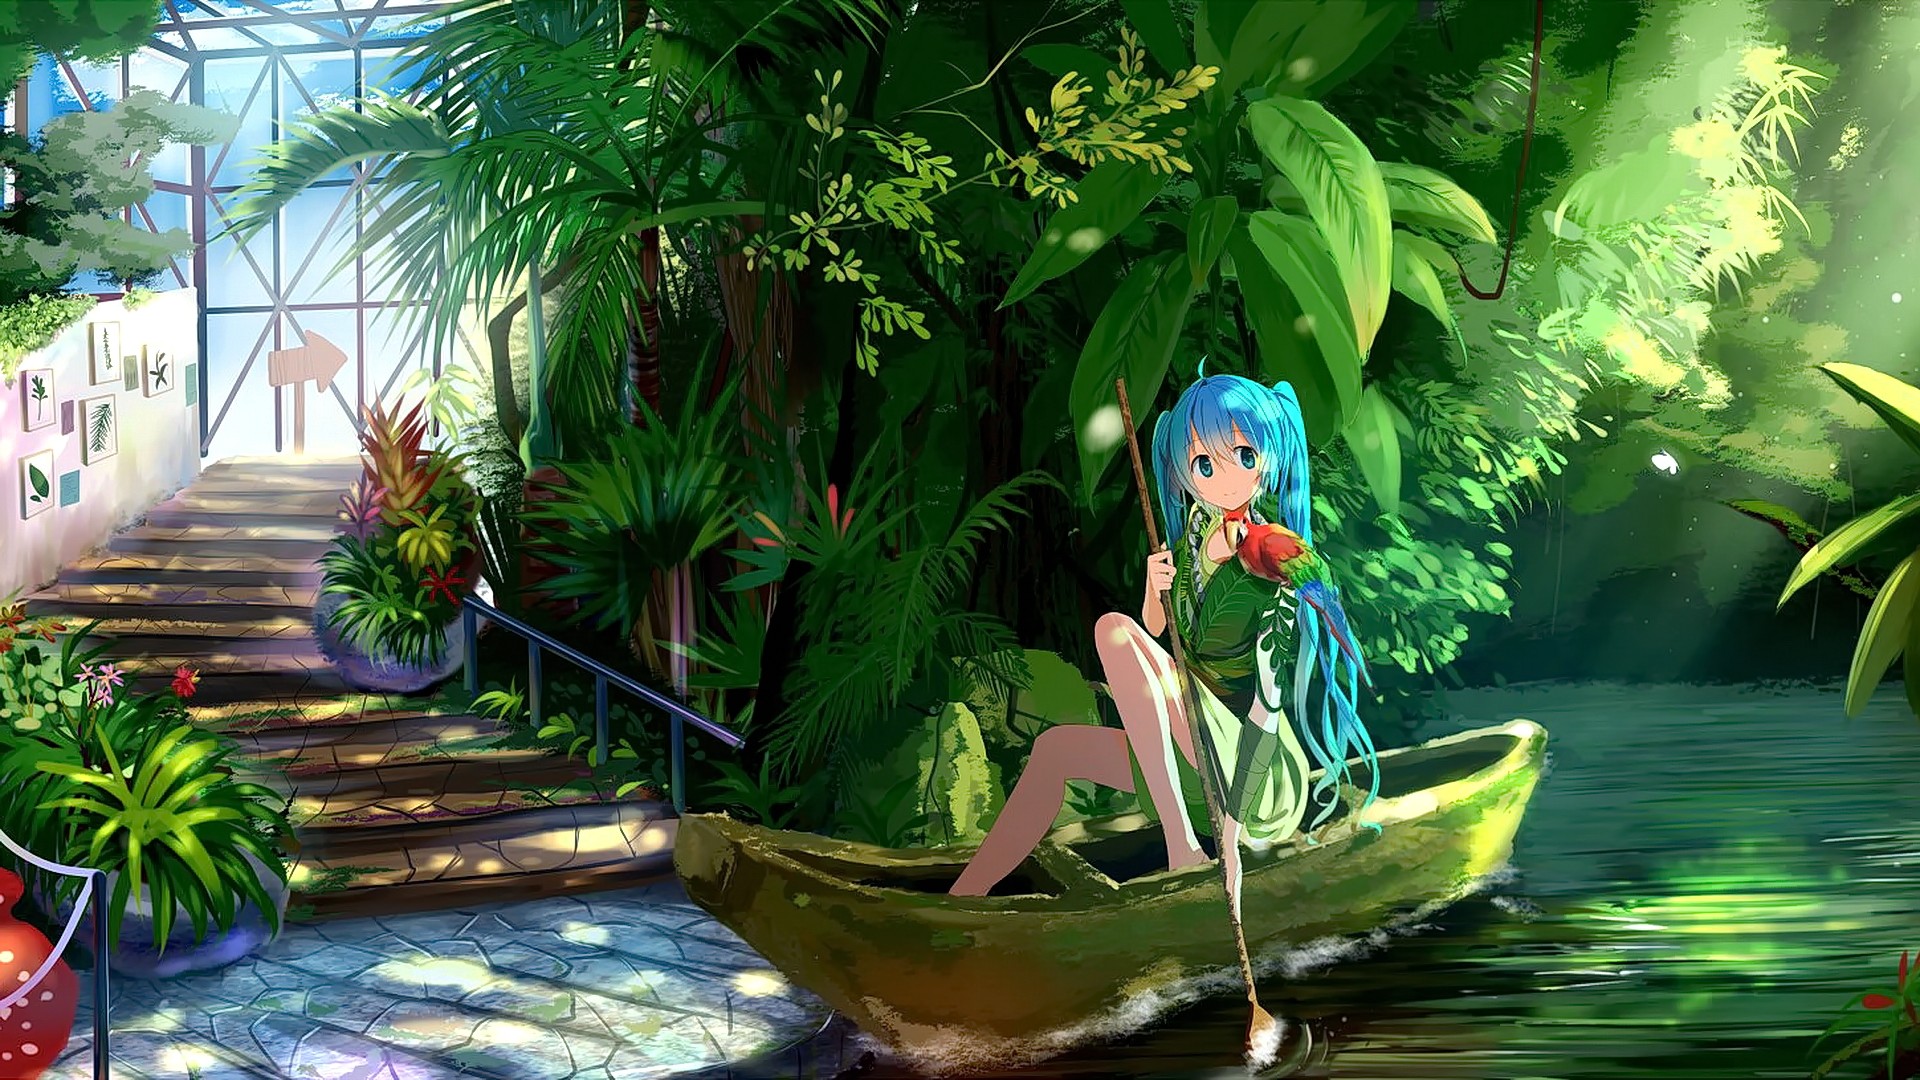 Anime 1920x1080 anime anime girls cyan hair long hair blue hair blue eyes Vocaloid water smiling Hatsune Miku vehicle boat